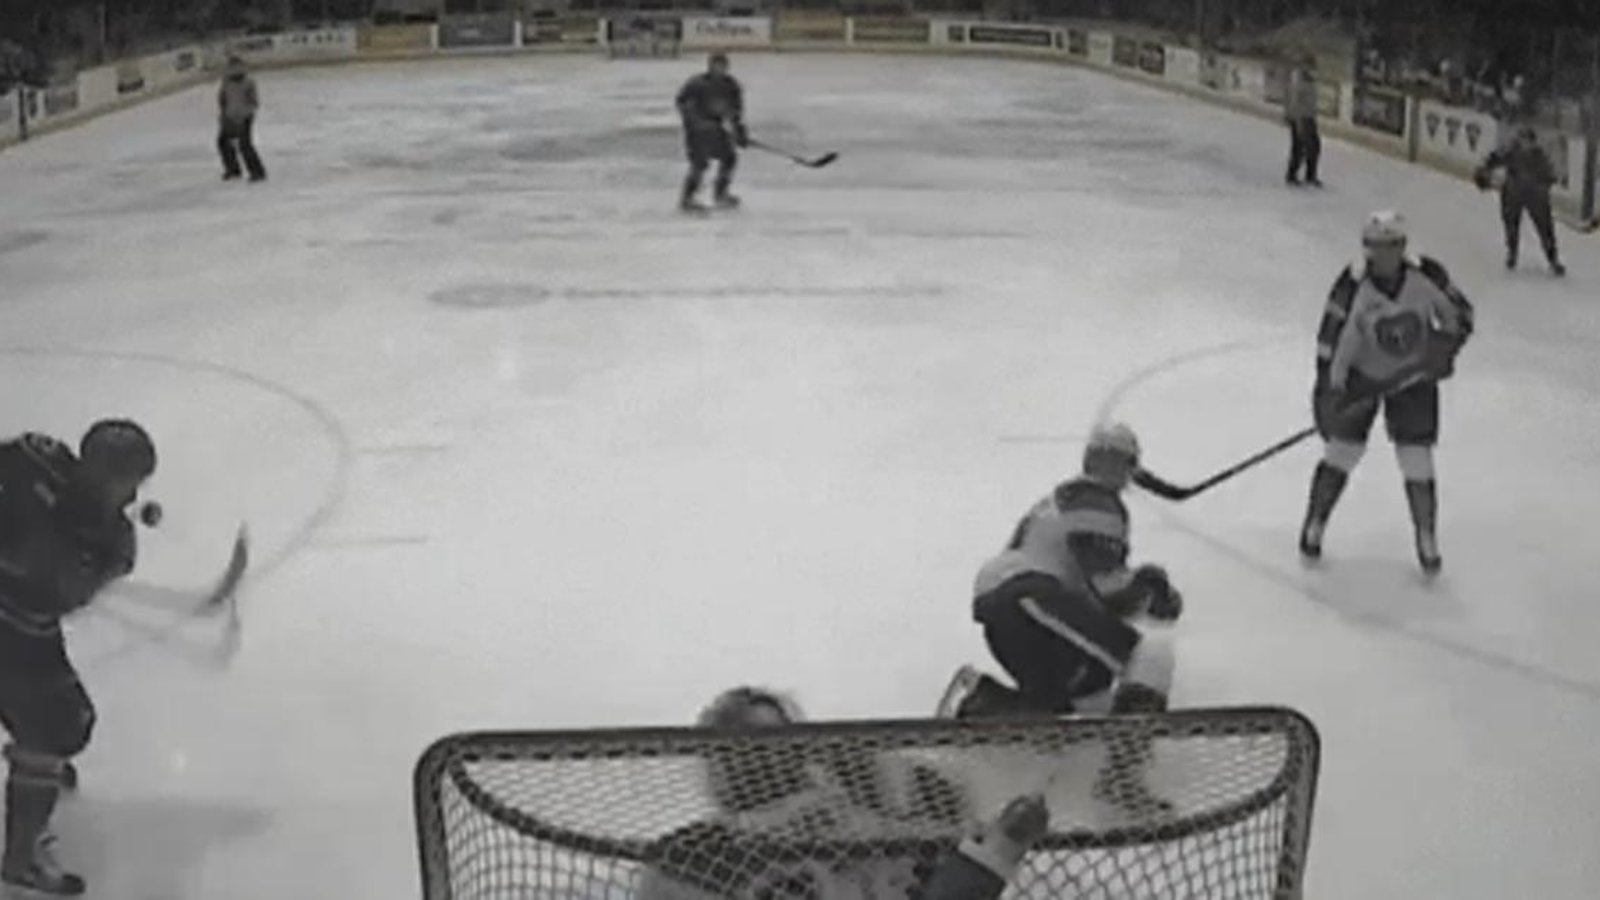 Junior hockey player find creative way to score. 